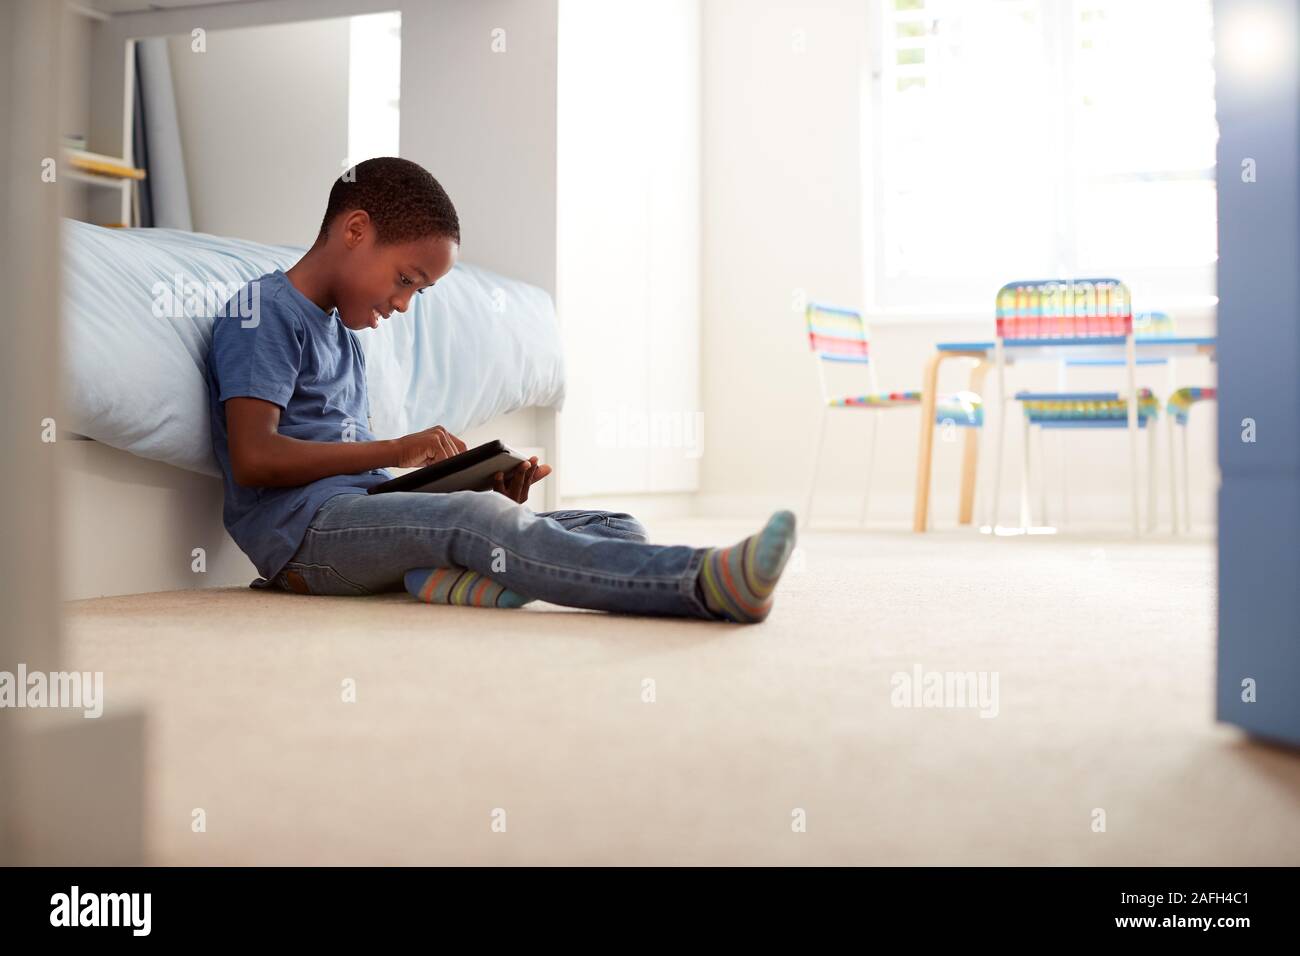 Boy Sitting On Floor In Bedroom Using Digital Tablet Stock Photo